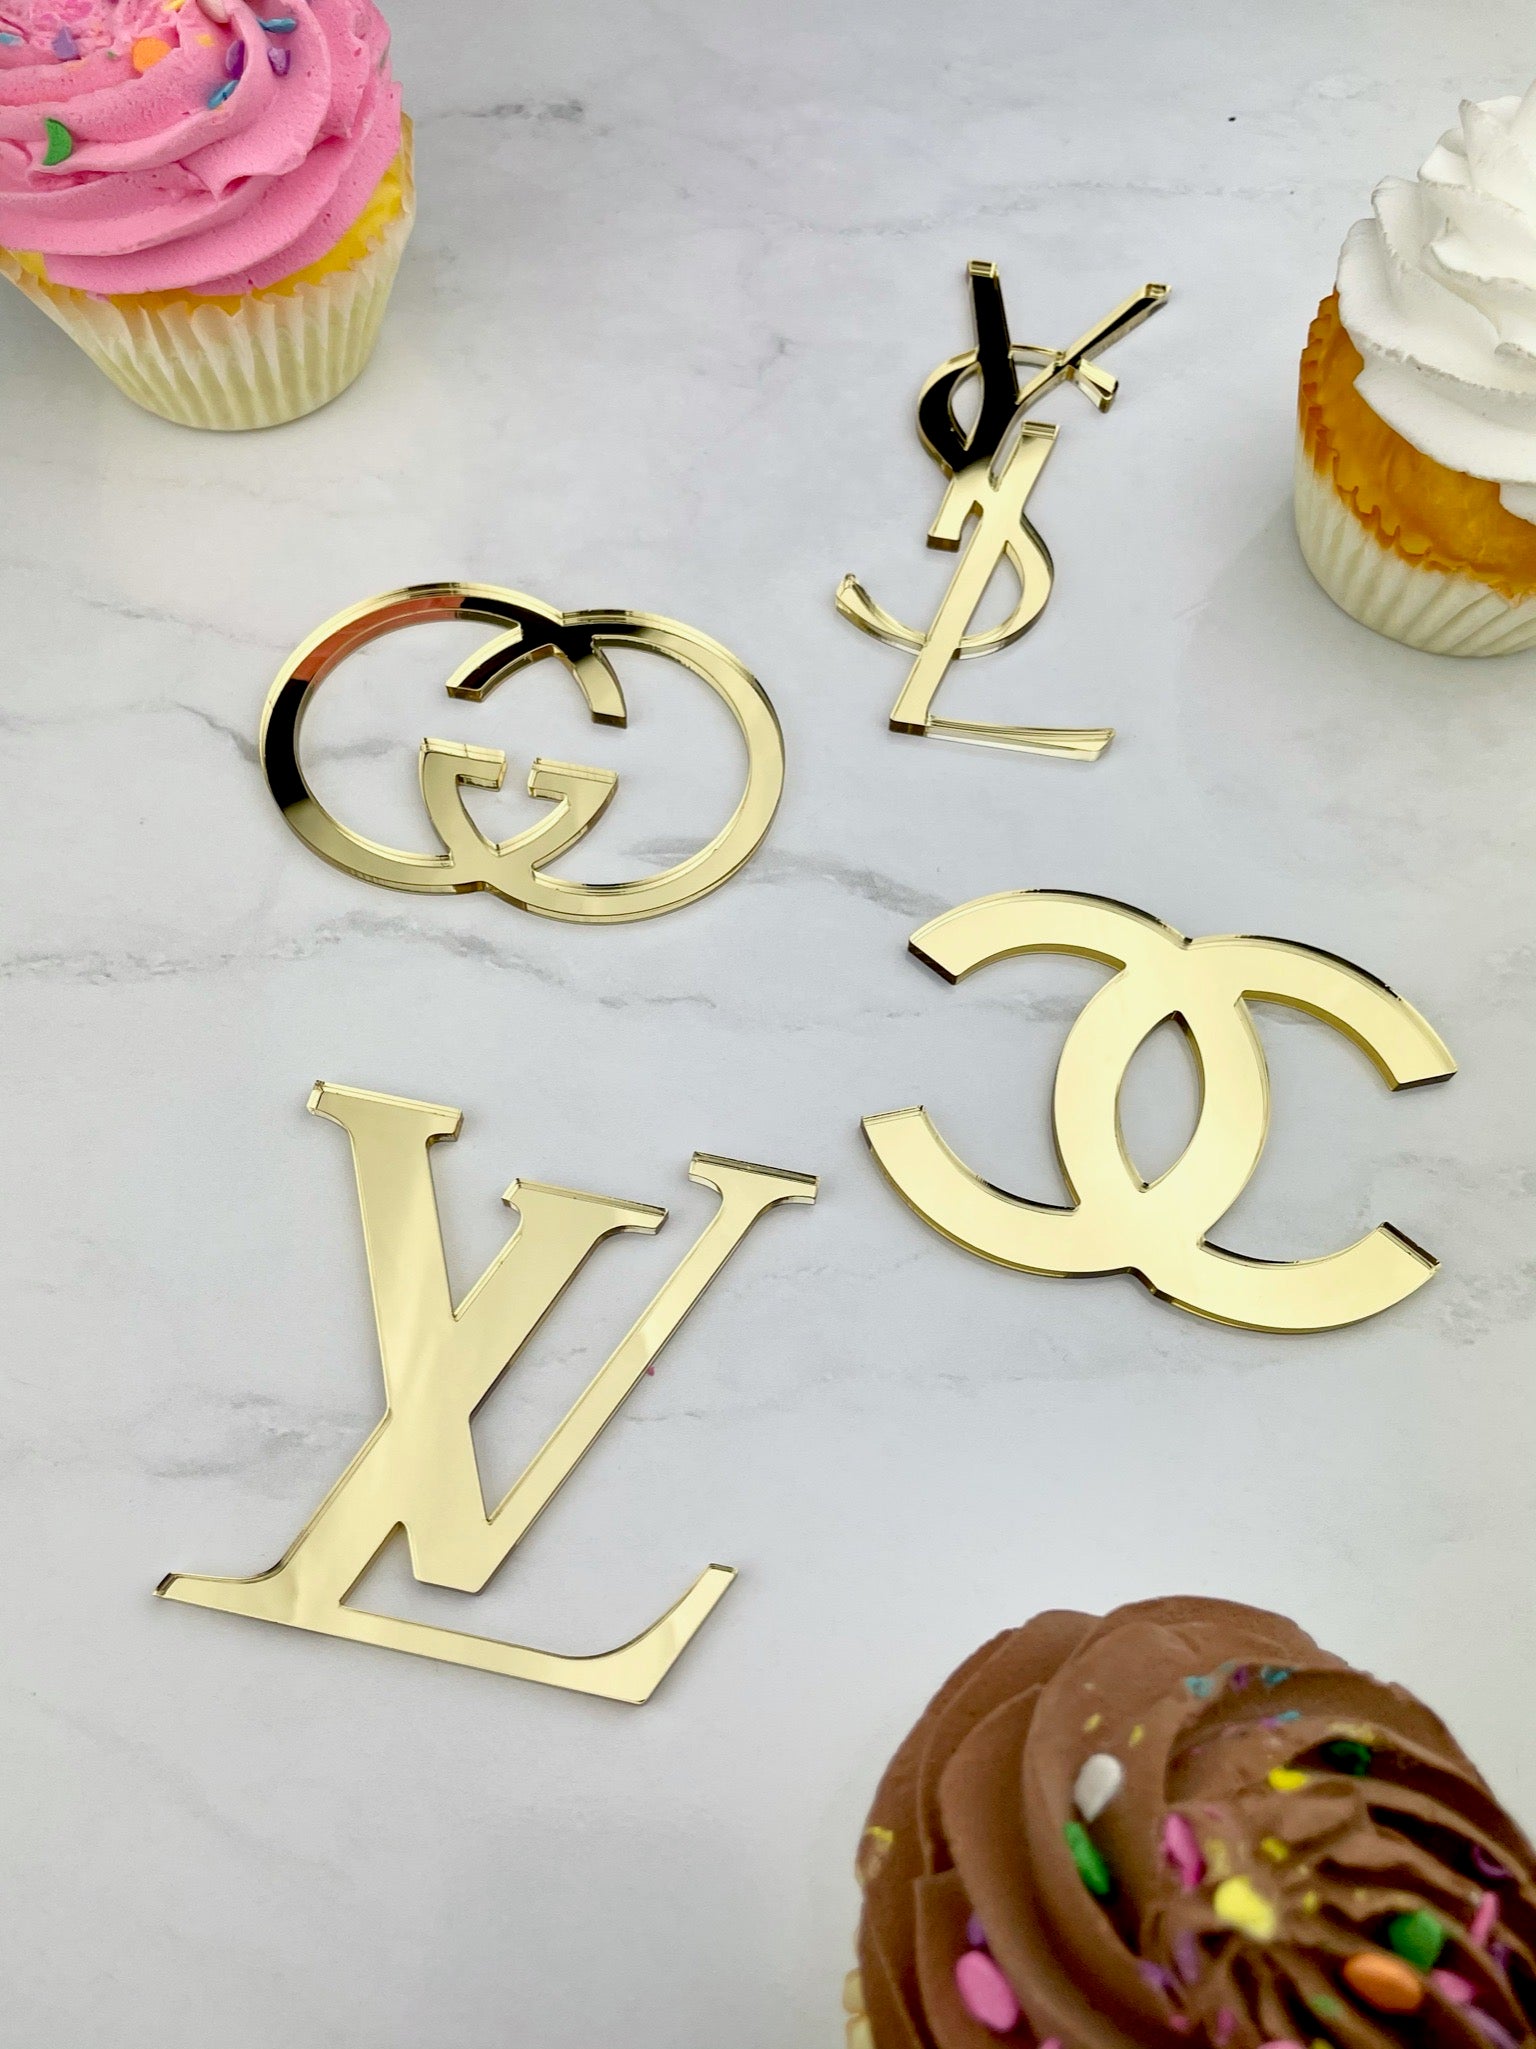 Chanel Gucci Louis Vuitton Cakes